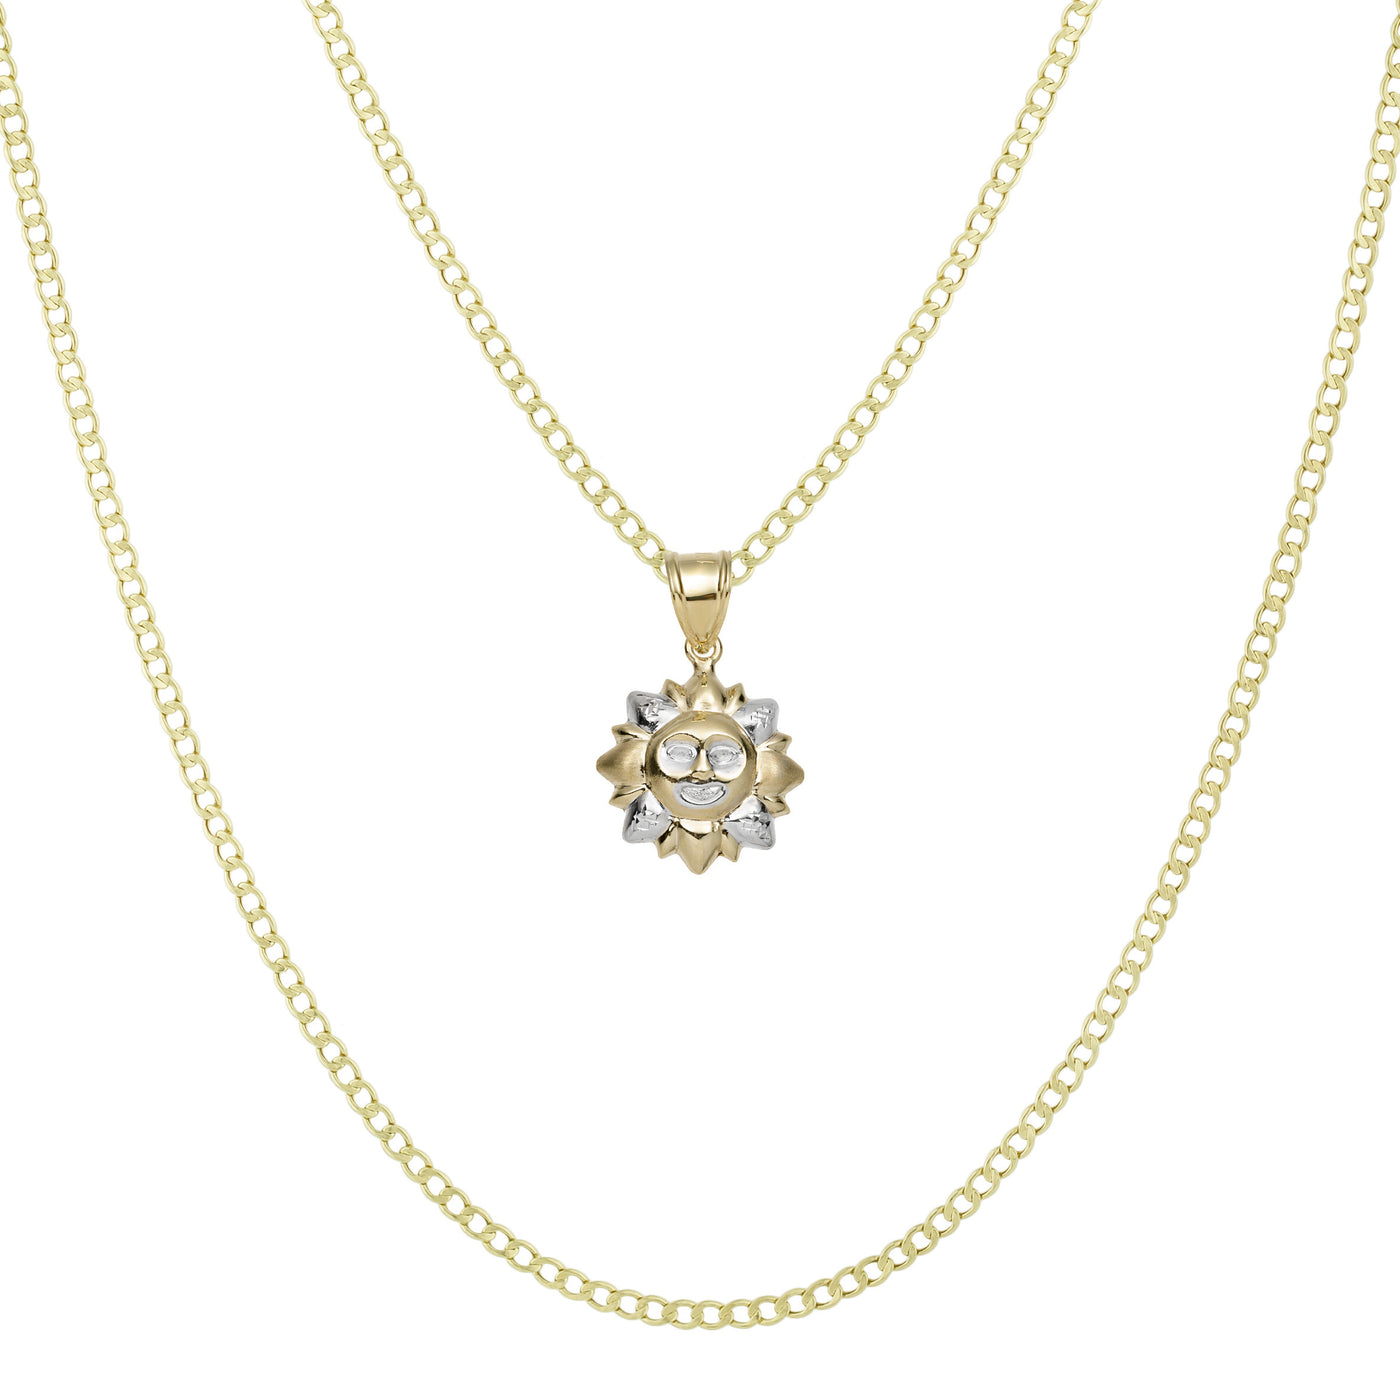 1 1/4" Sun Face Pendant & Chain Necklace Set 10K Yellow White Gold